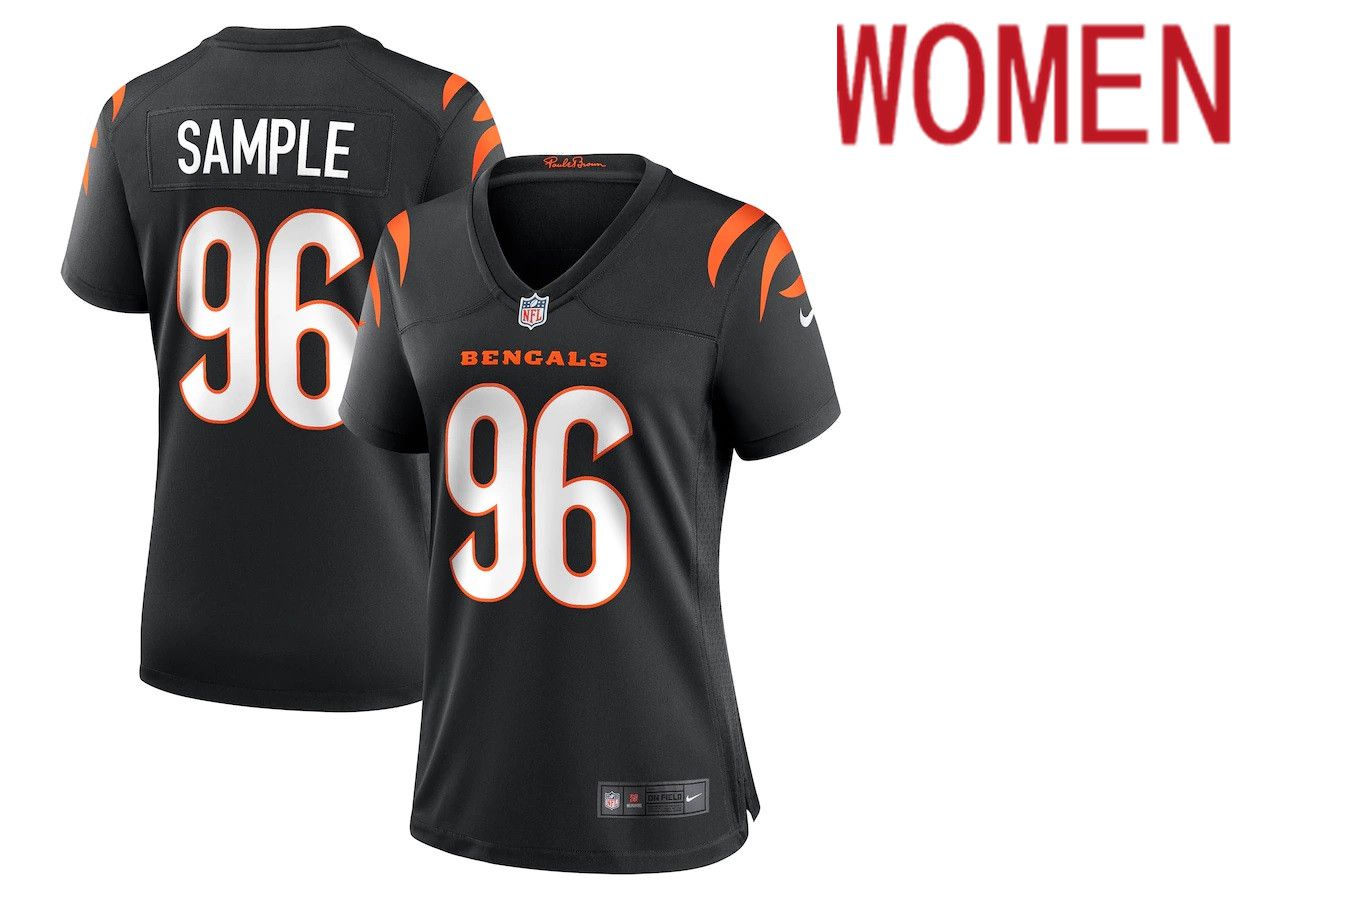 Women Cincinnati Bengals 96 Cam Sample Nike Black Game NFL Jersey